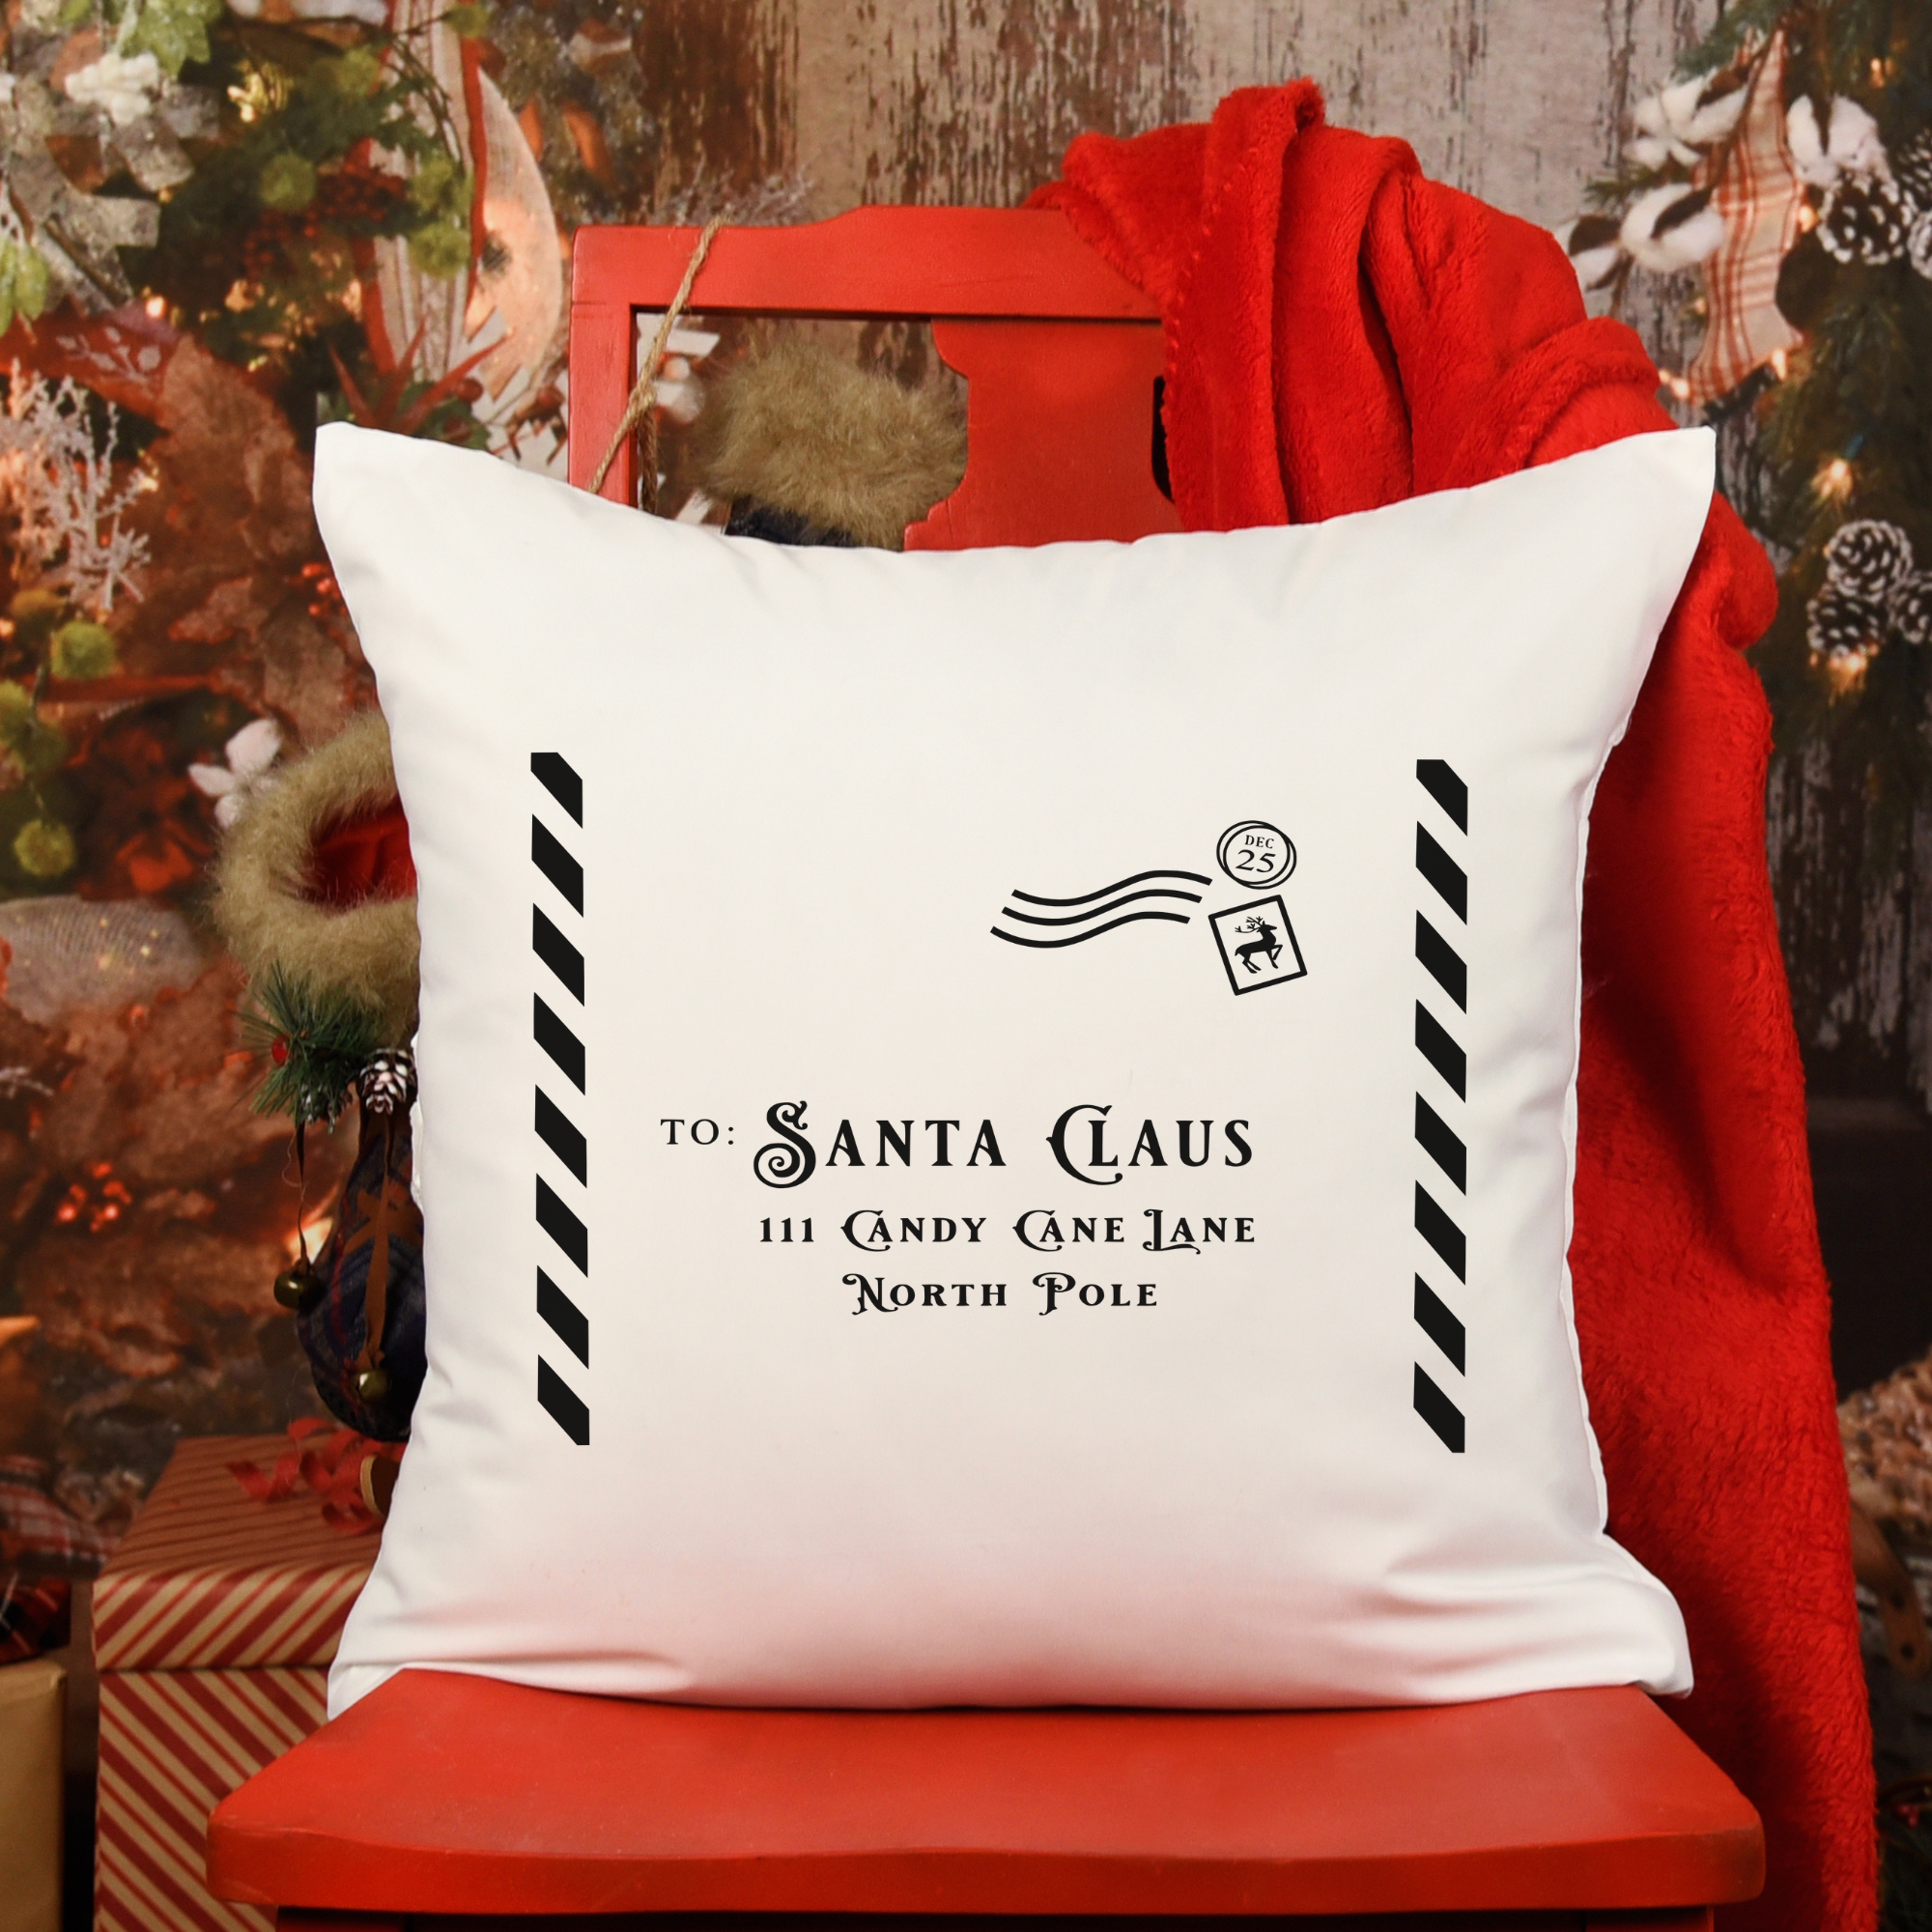 Santa Claus Envelope Christmas Pillow Cover